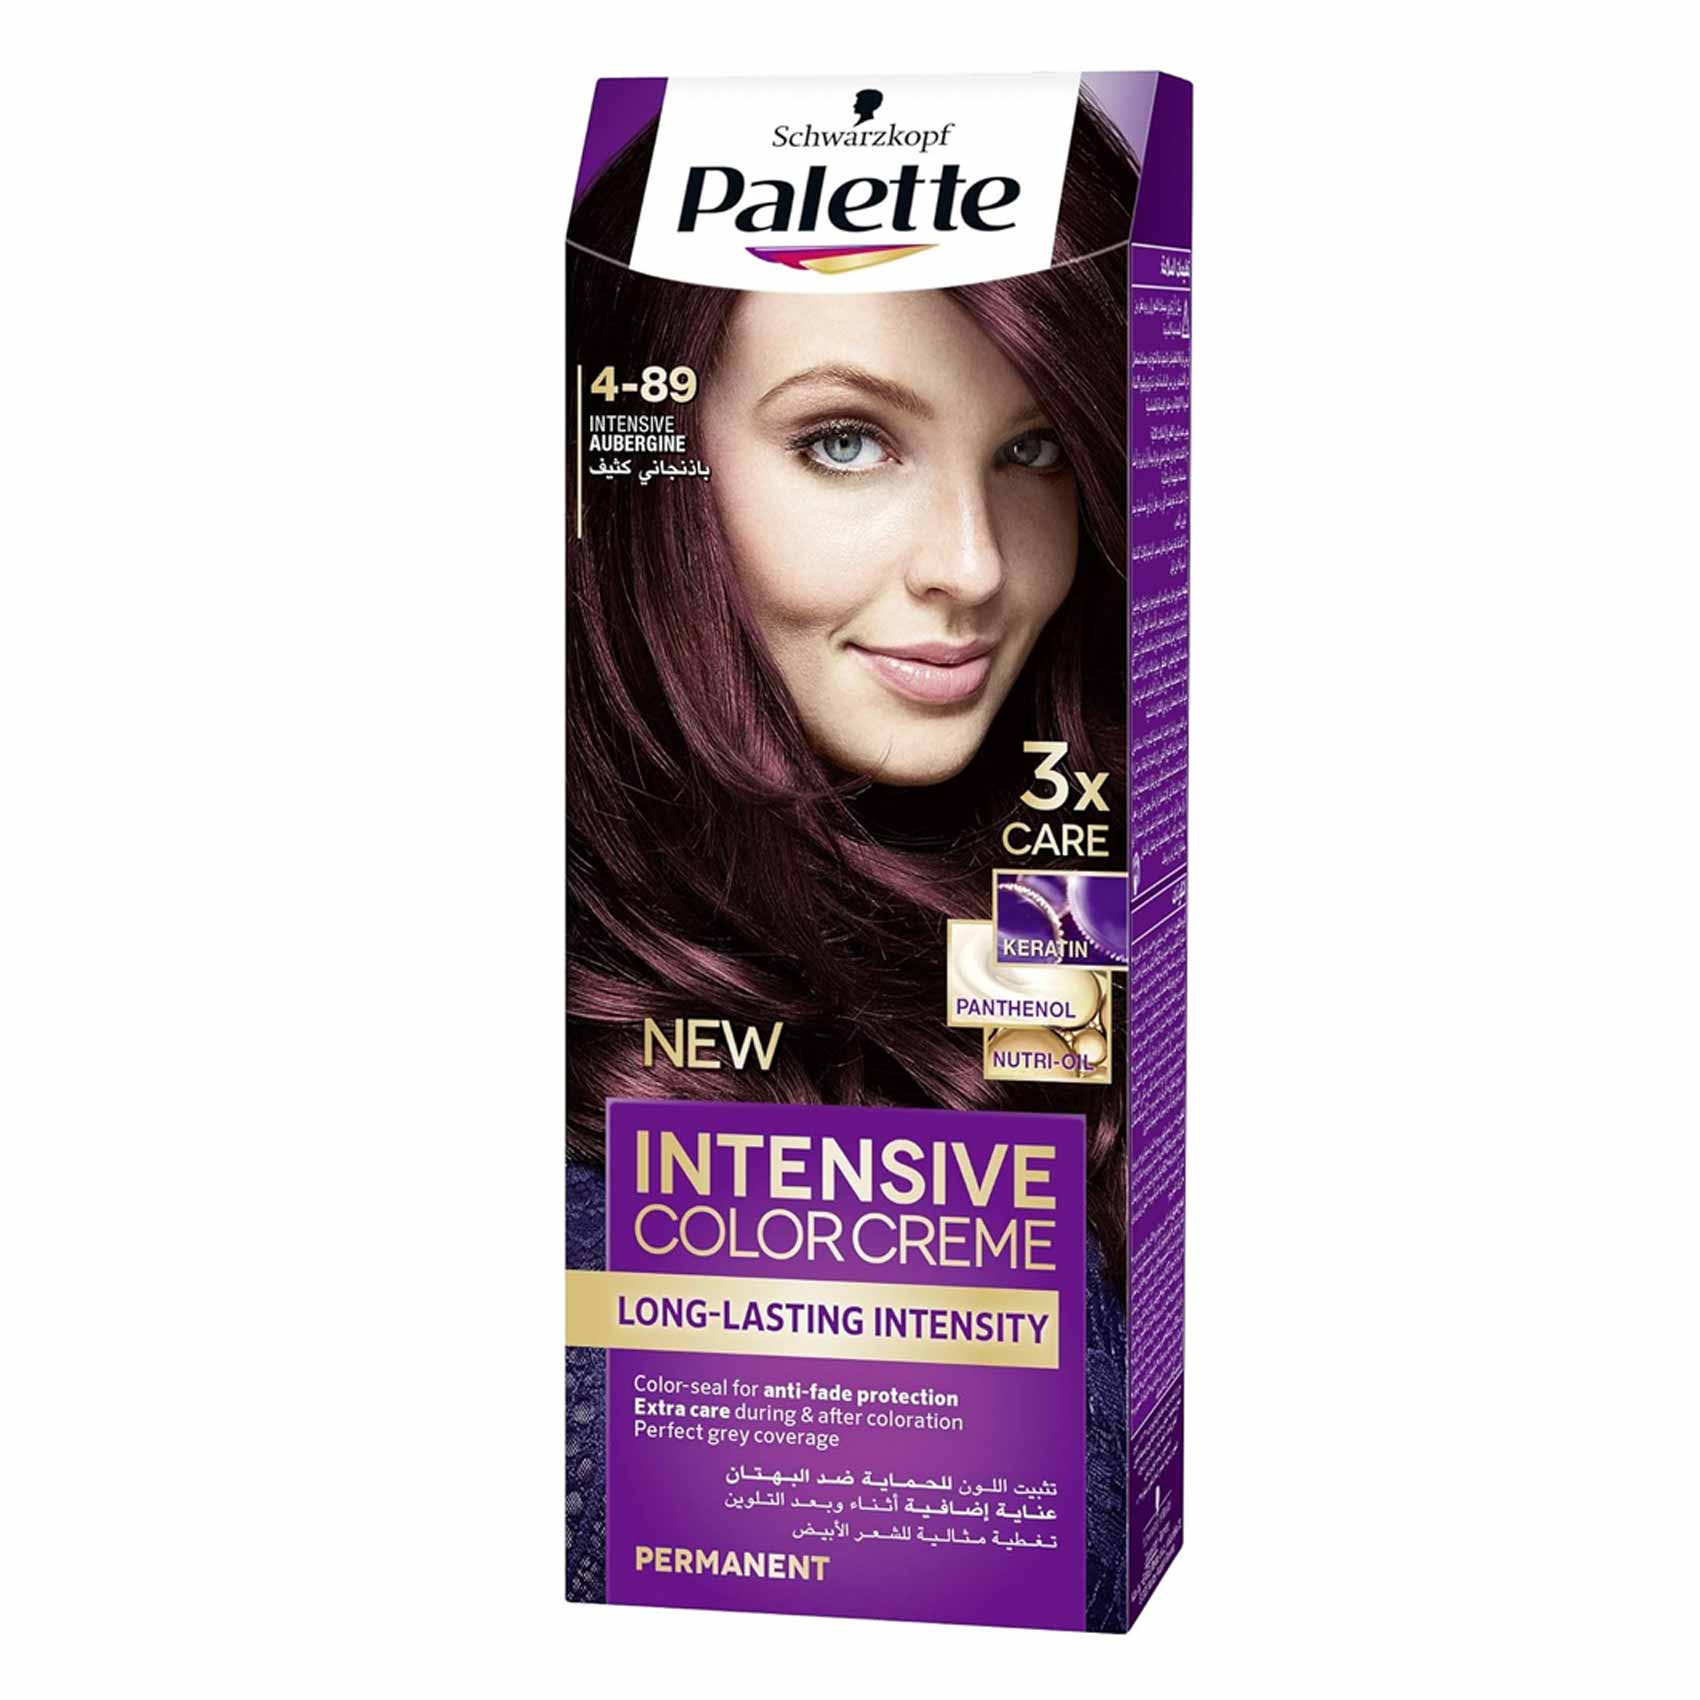 Schwarzkopf Palette Permanent Intensive Hair Color Cream 4-89 Intensive Aubergine 50ml